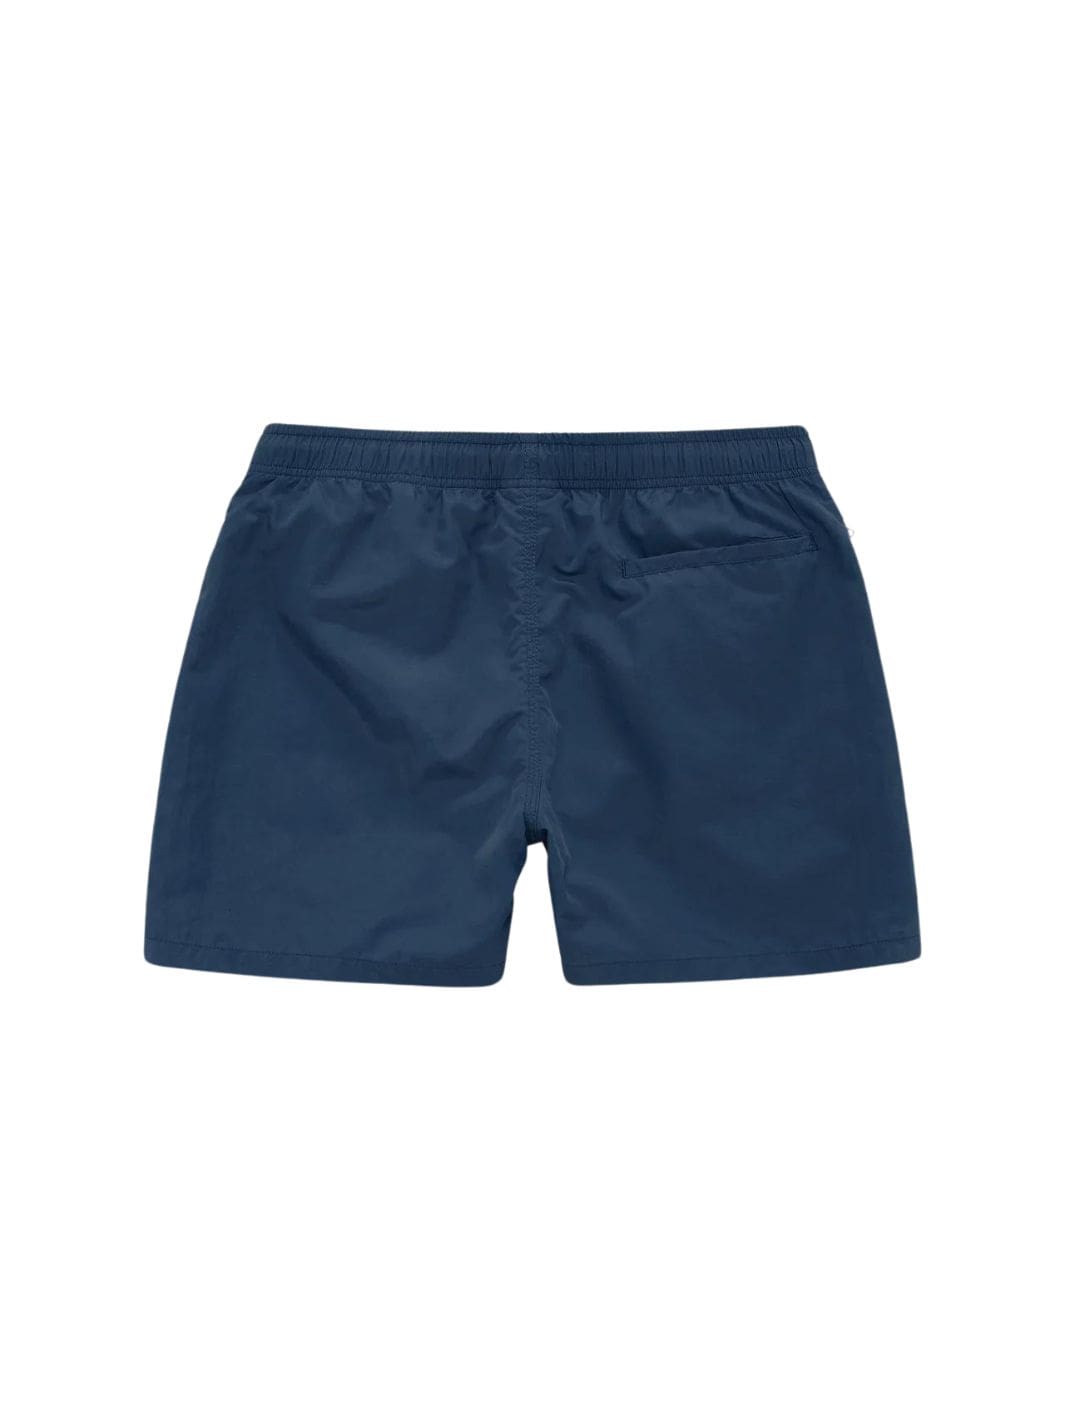 Oas Shorts Badeshorts | Nylon Swim Shorts Navy